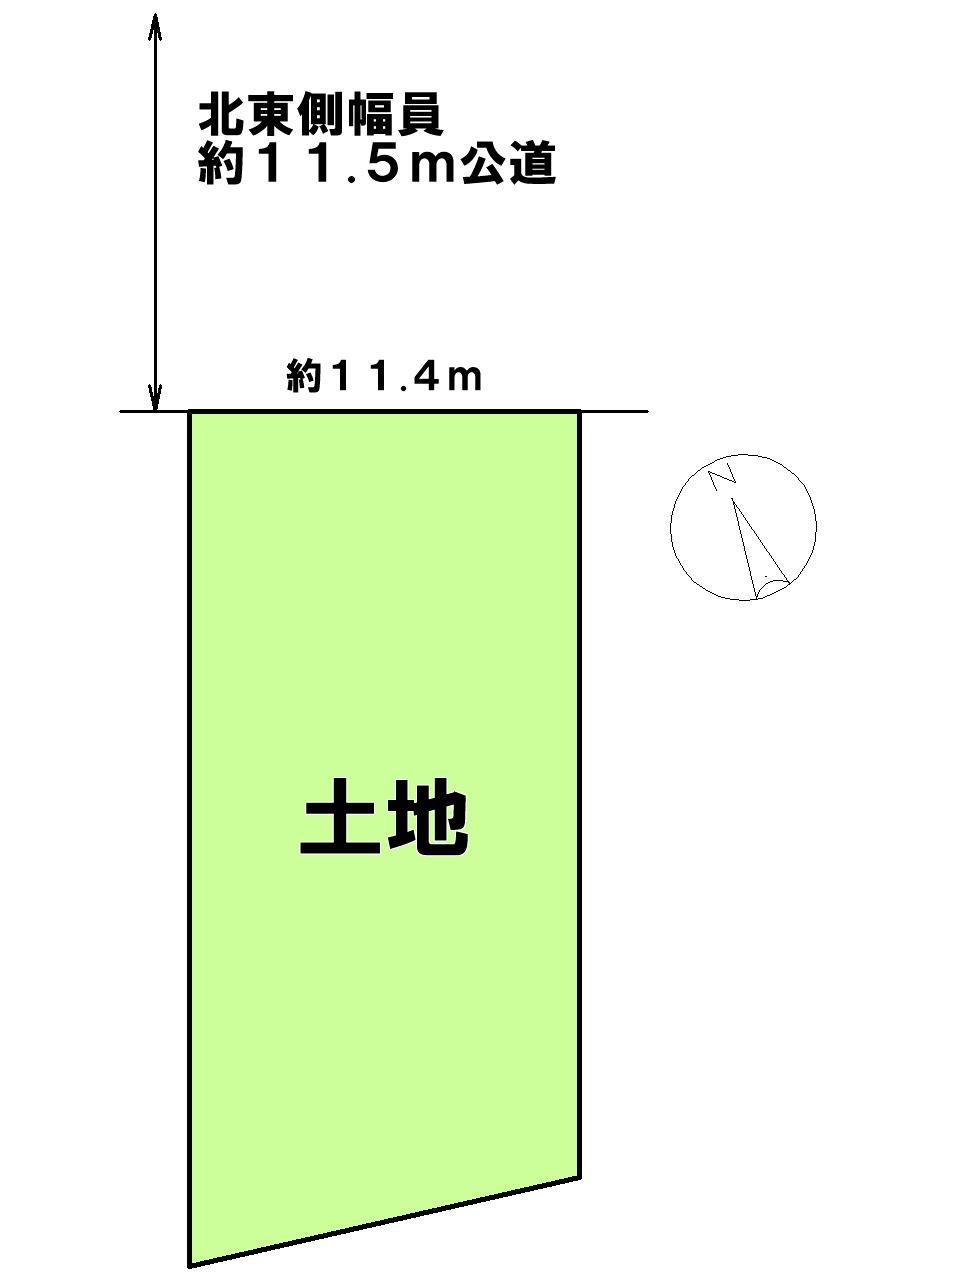 Compartment figure. Land price 21 million yen, Land area 257 sq m